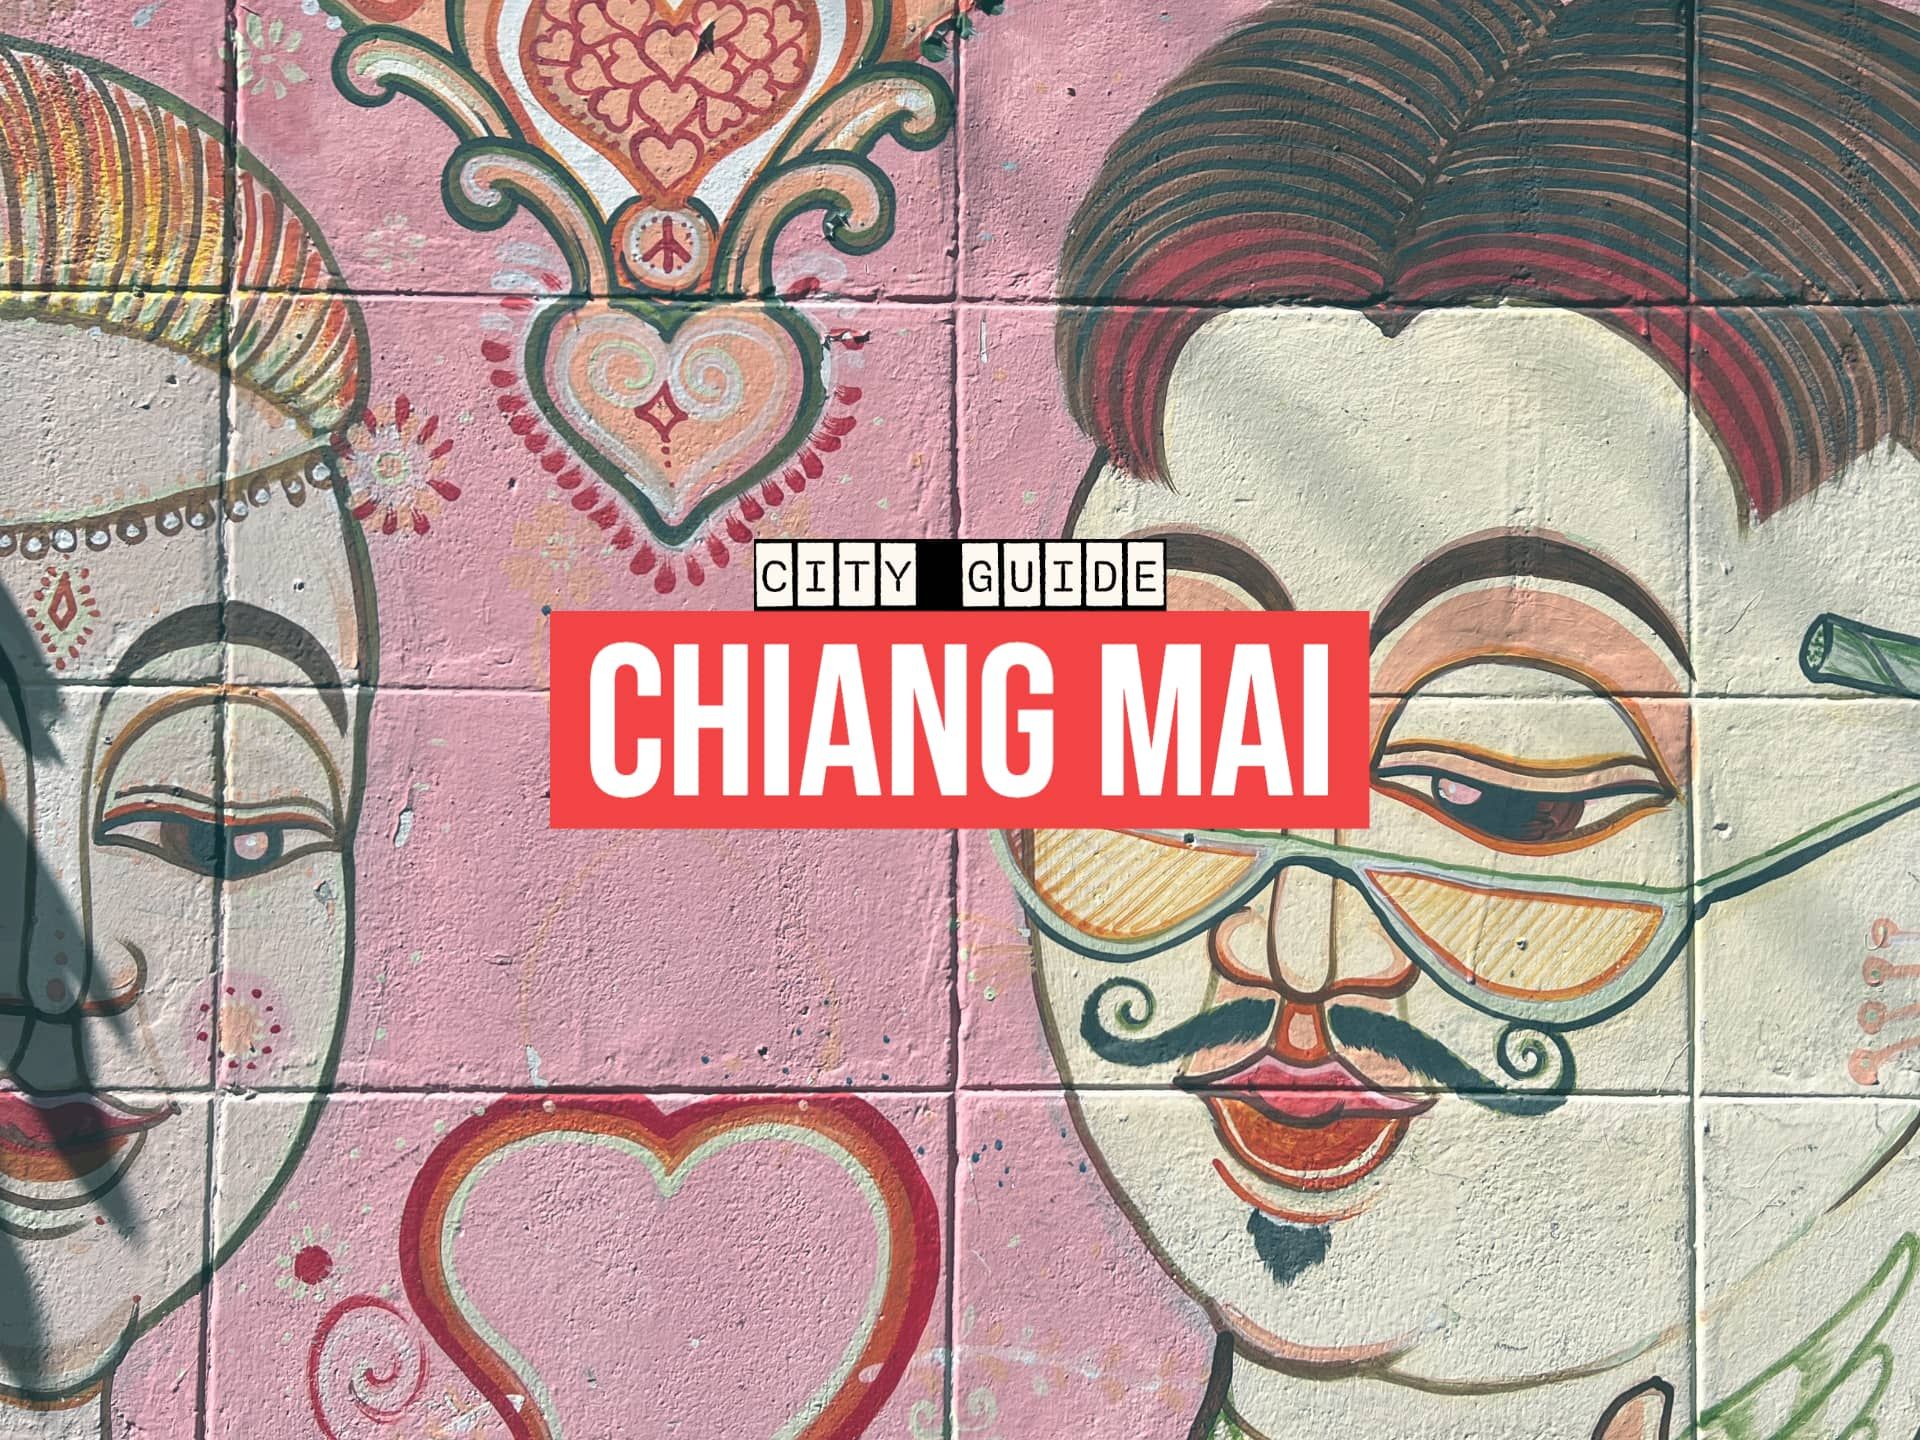 Image artwork for banner of chiang mai blog entry.